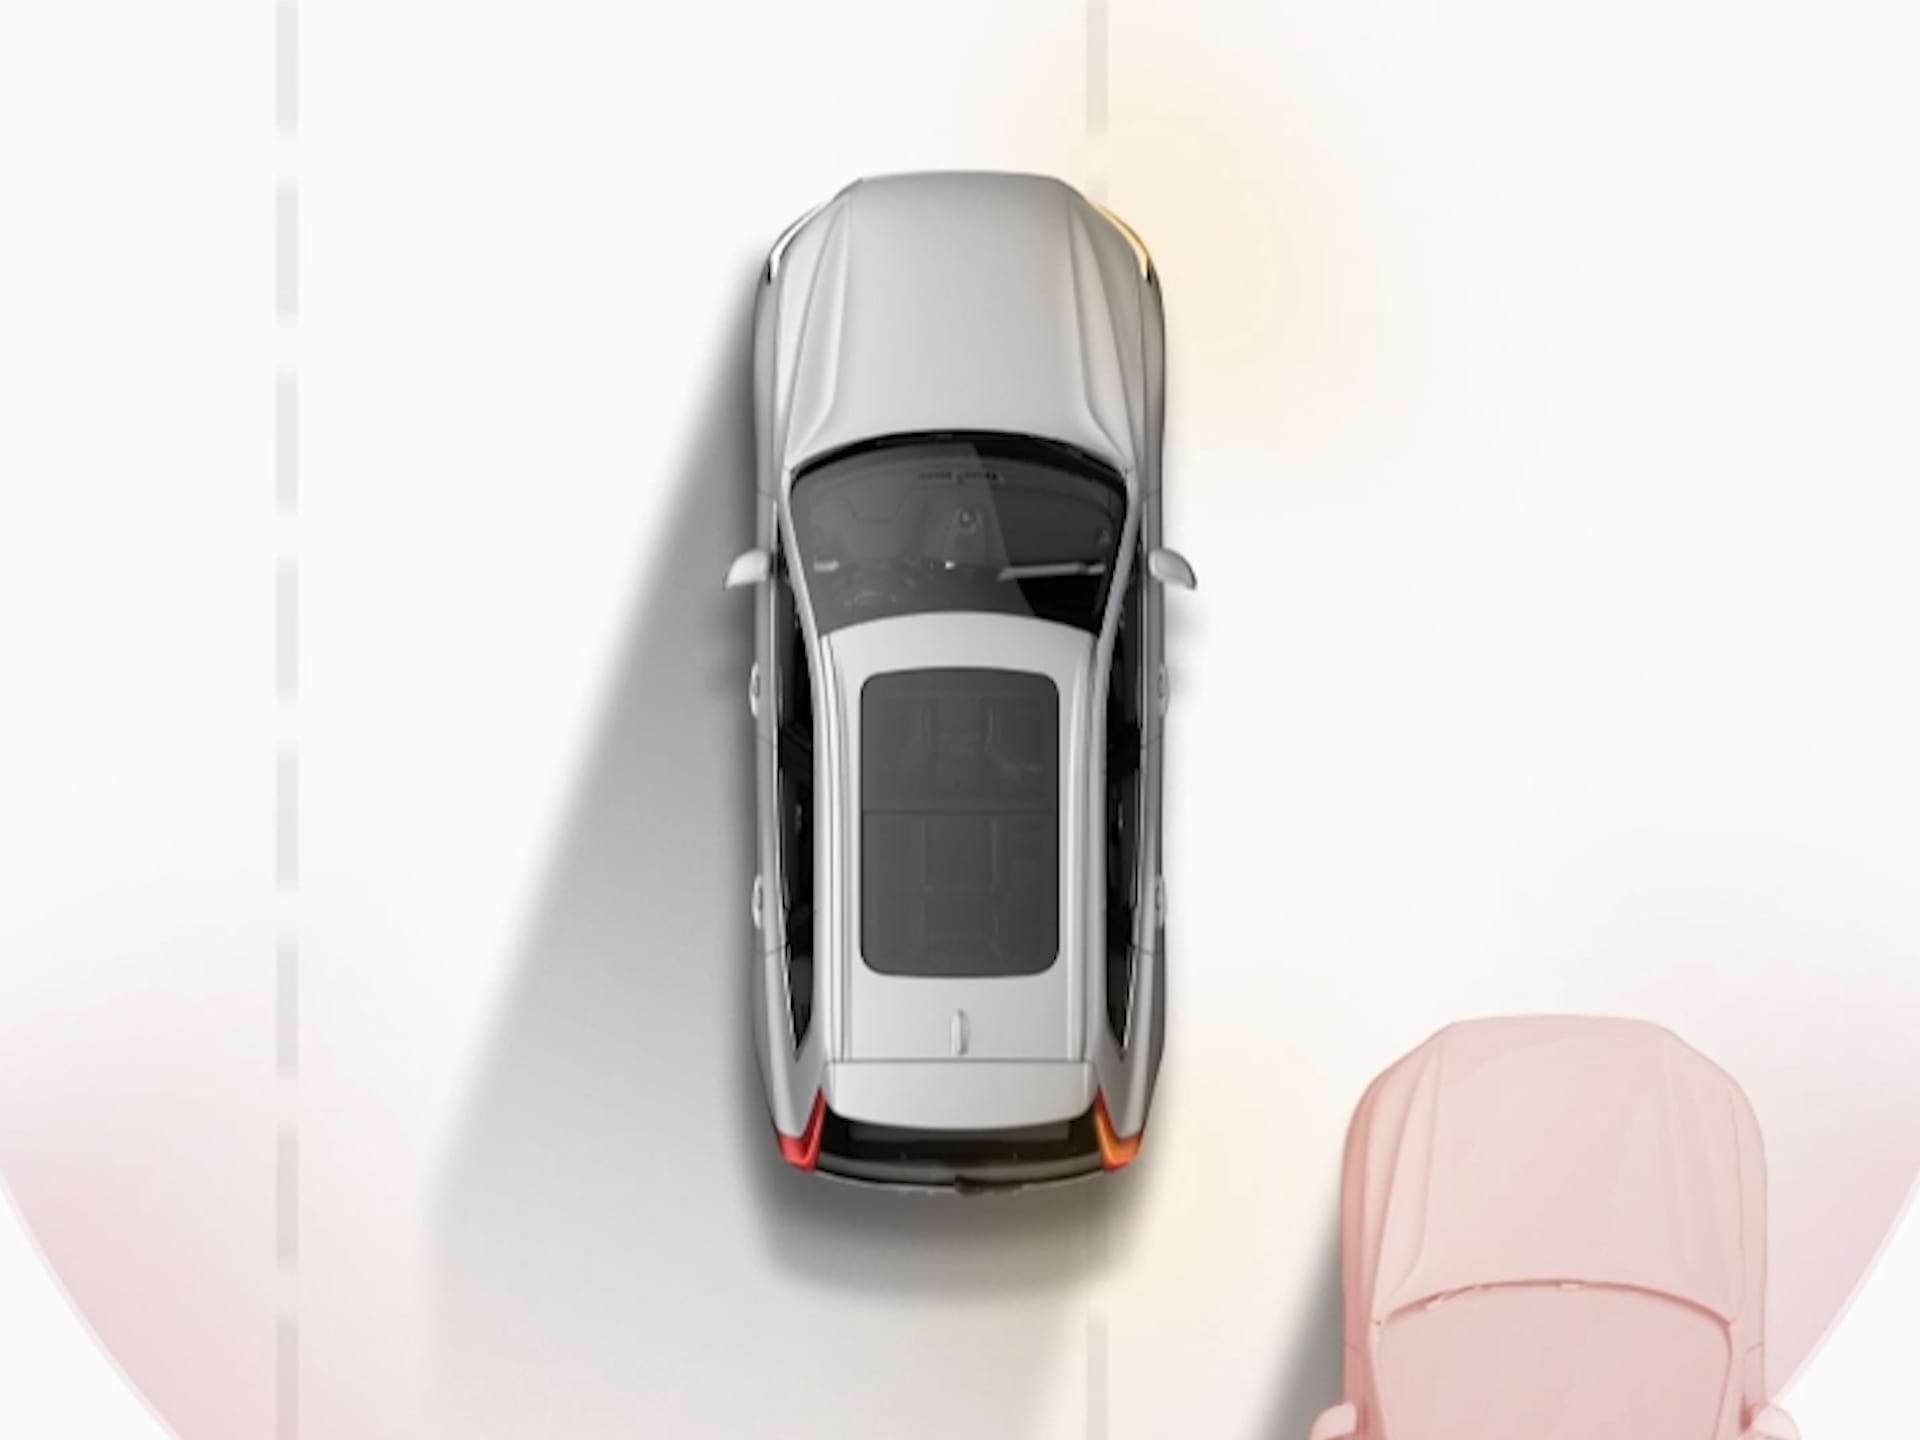 Илюстрирано изображение на автомобил Volvo отгоре, движещ се успоредно с други превозни средства.